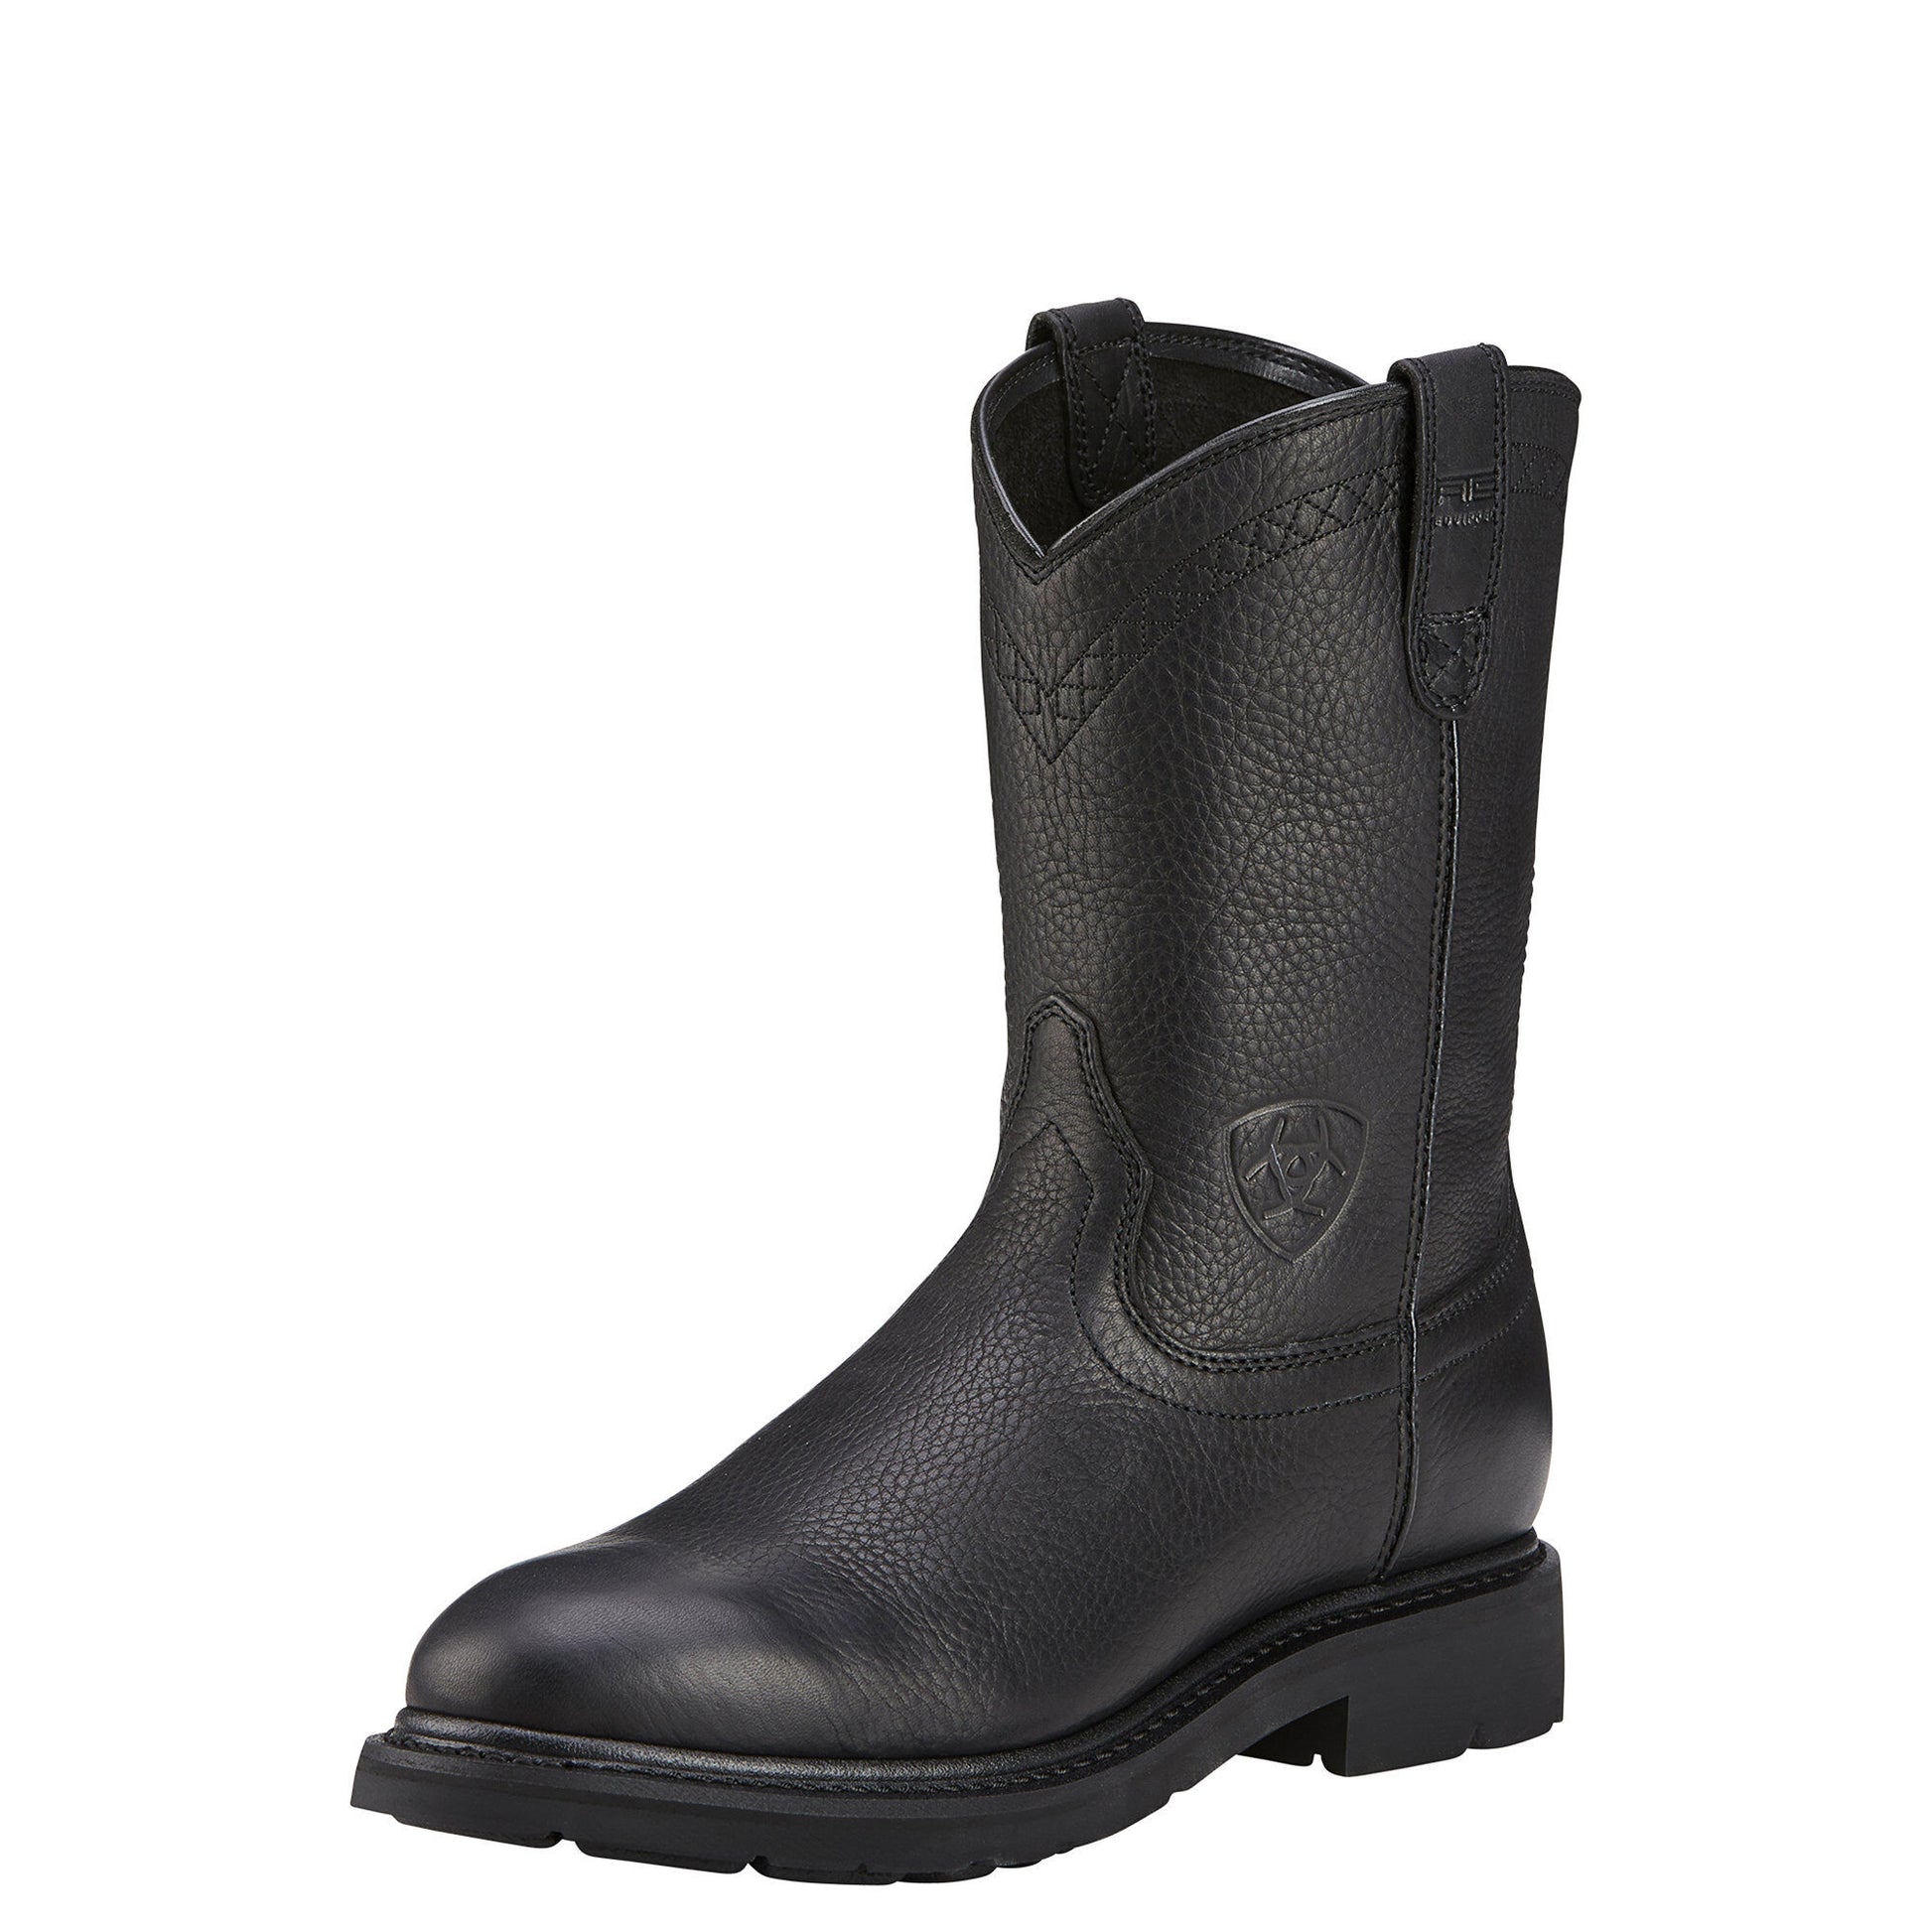 Ariat Men's Sierra Boot - Black - French's Boots